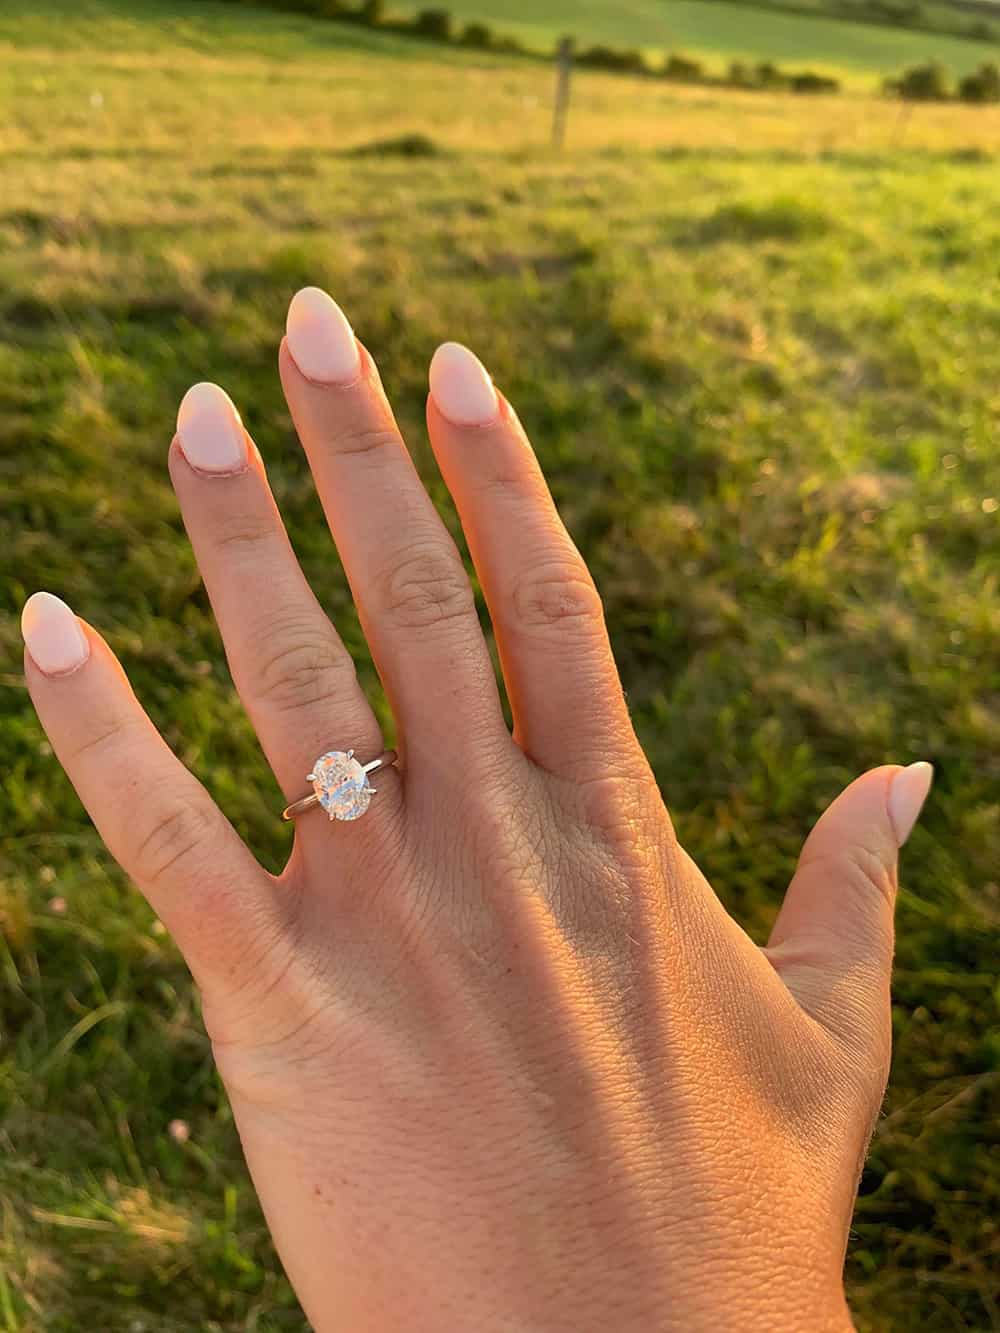 custom engagement rings los angeles concierge diamonds